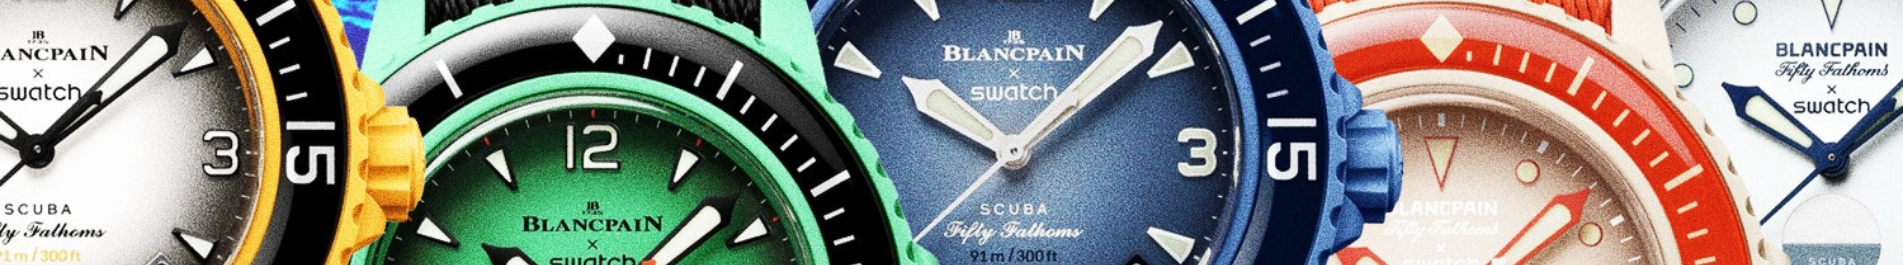 Swatch x Blancpain